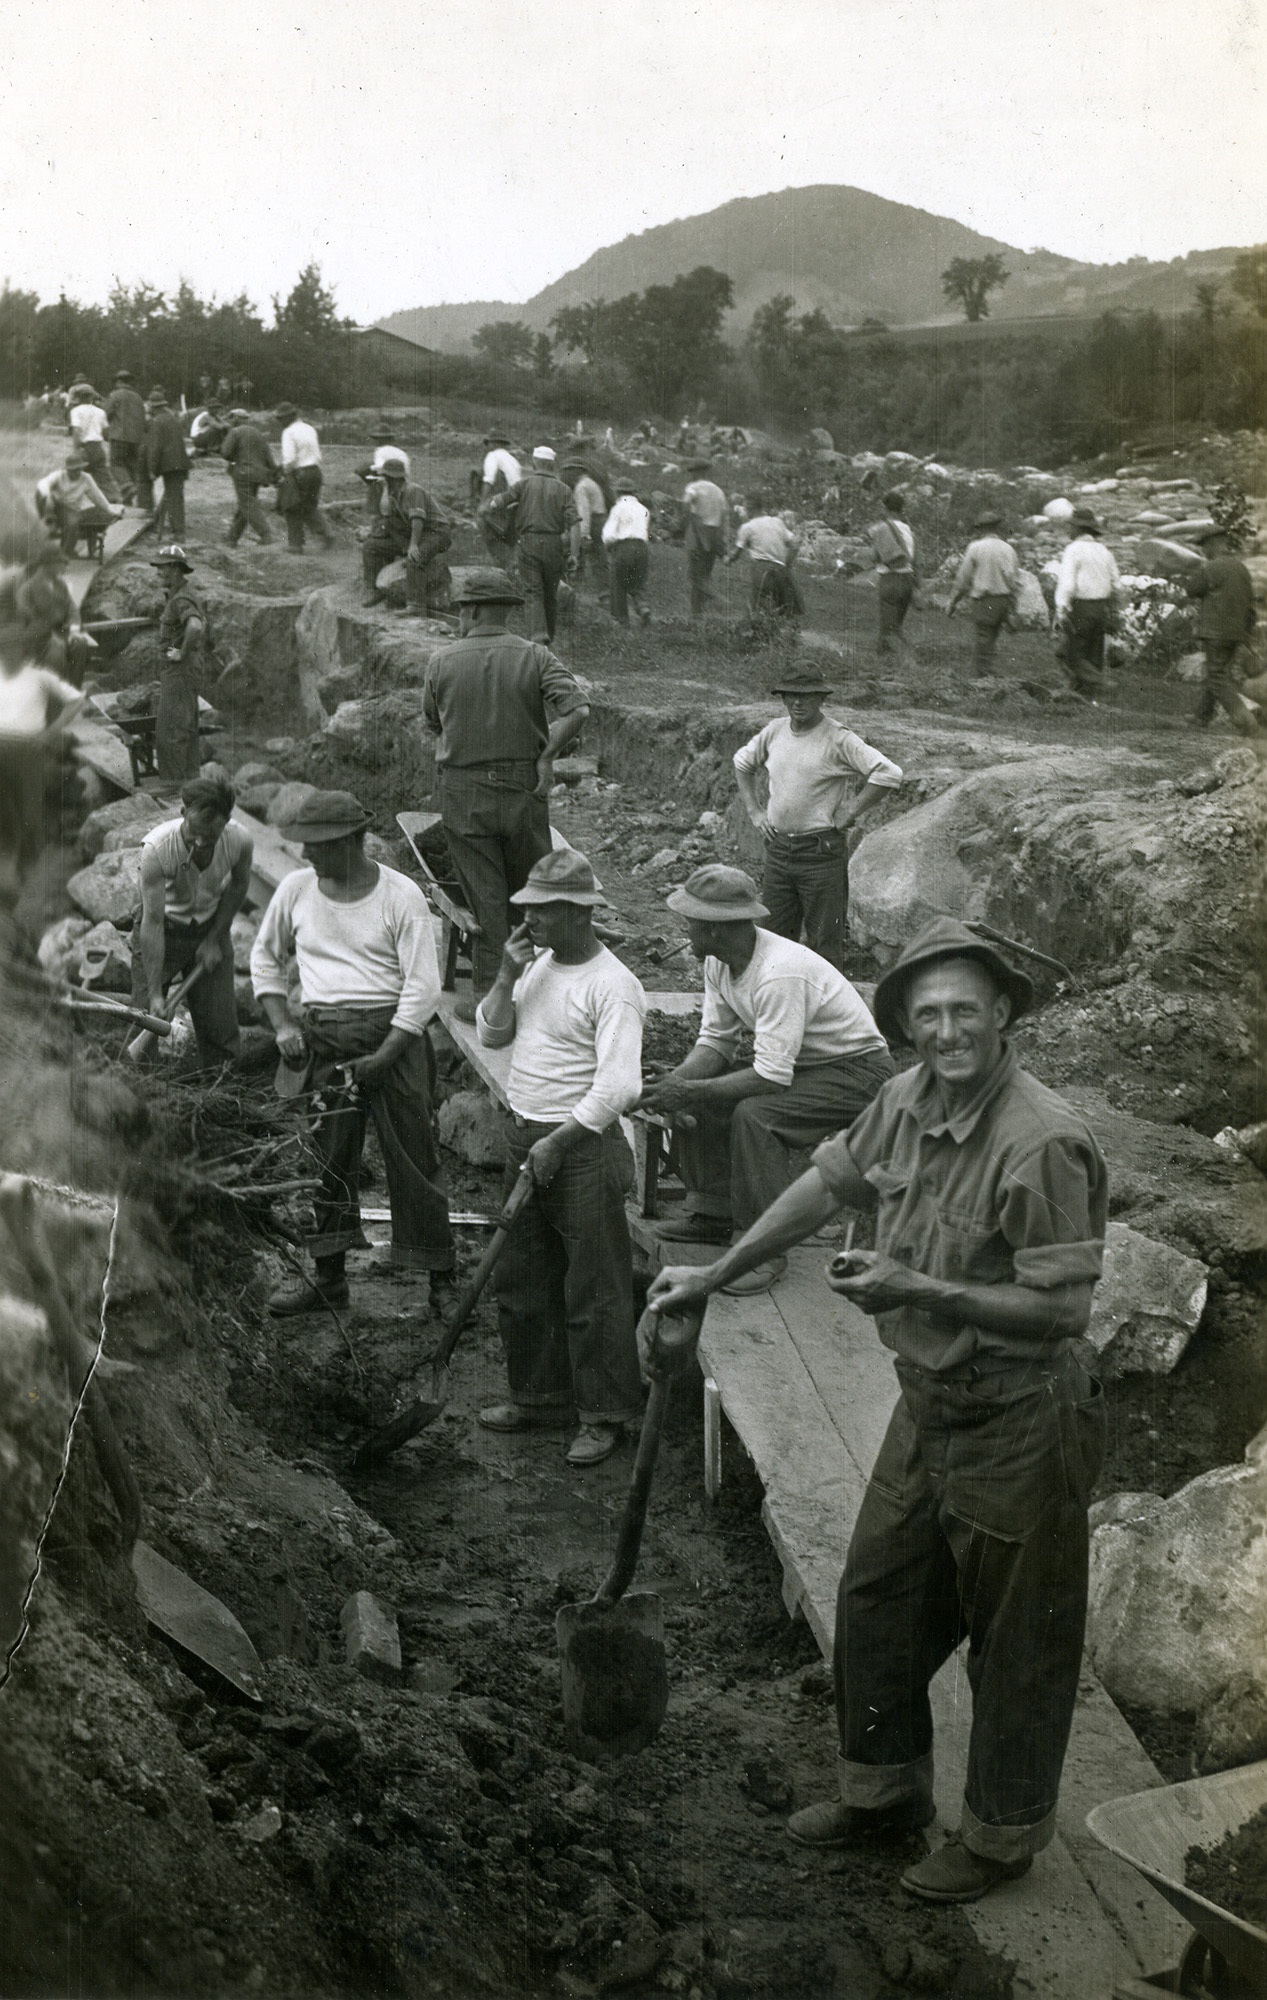 Men with shovels excavating soil and rocks